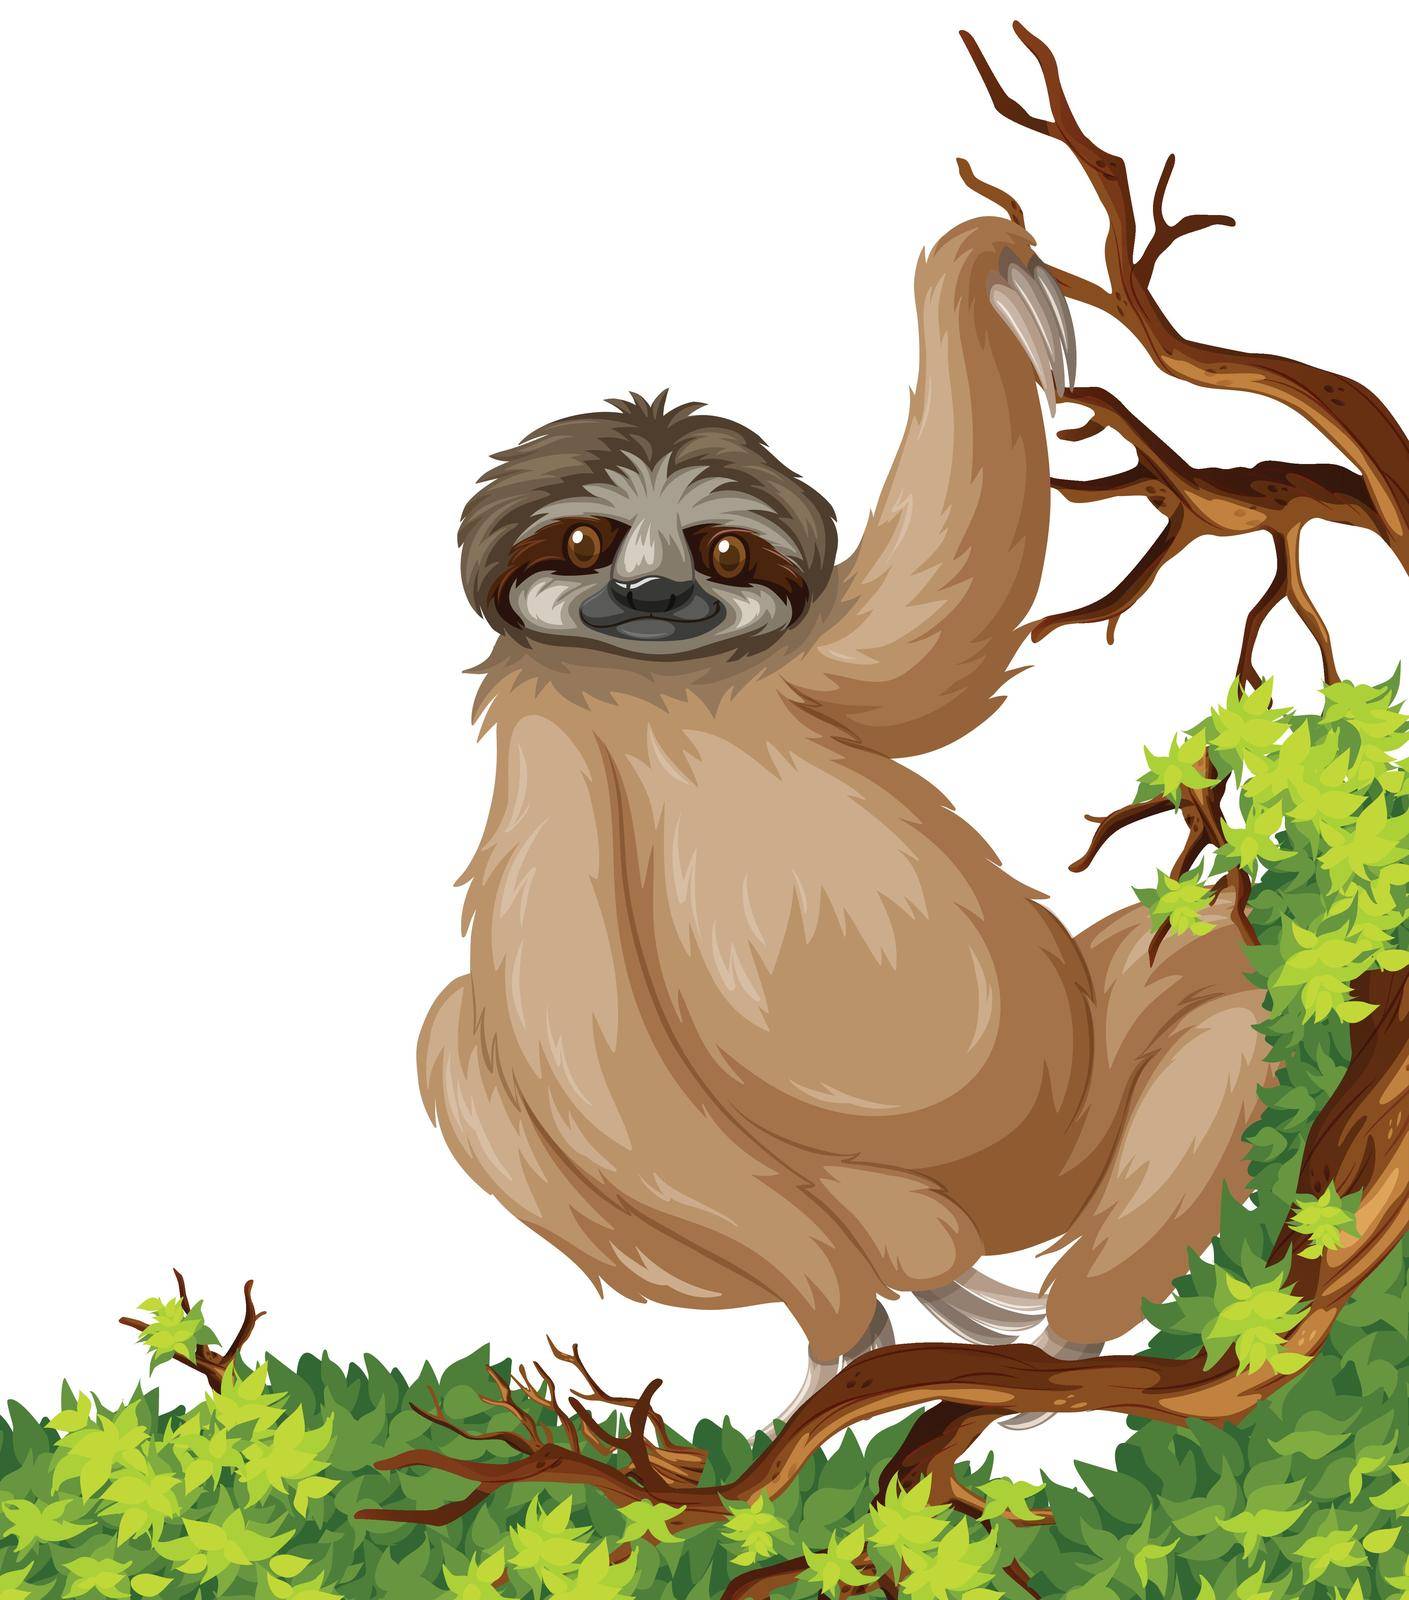 Cute sloth on branch illustration